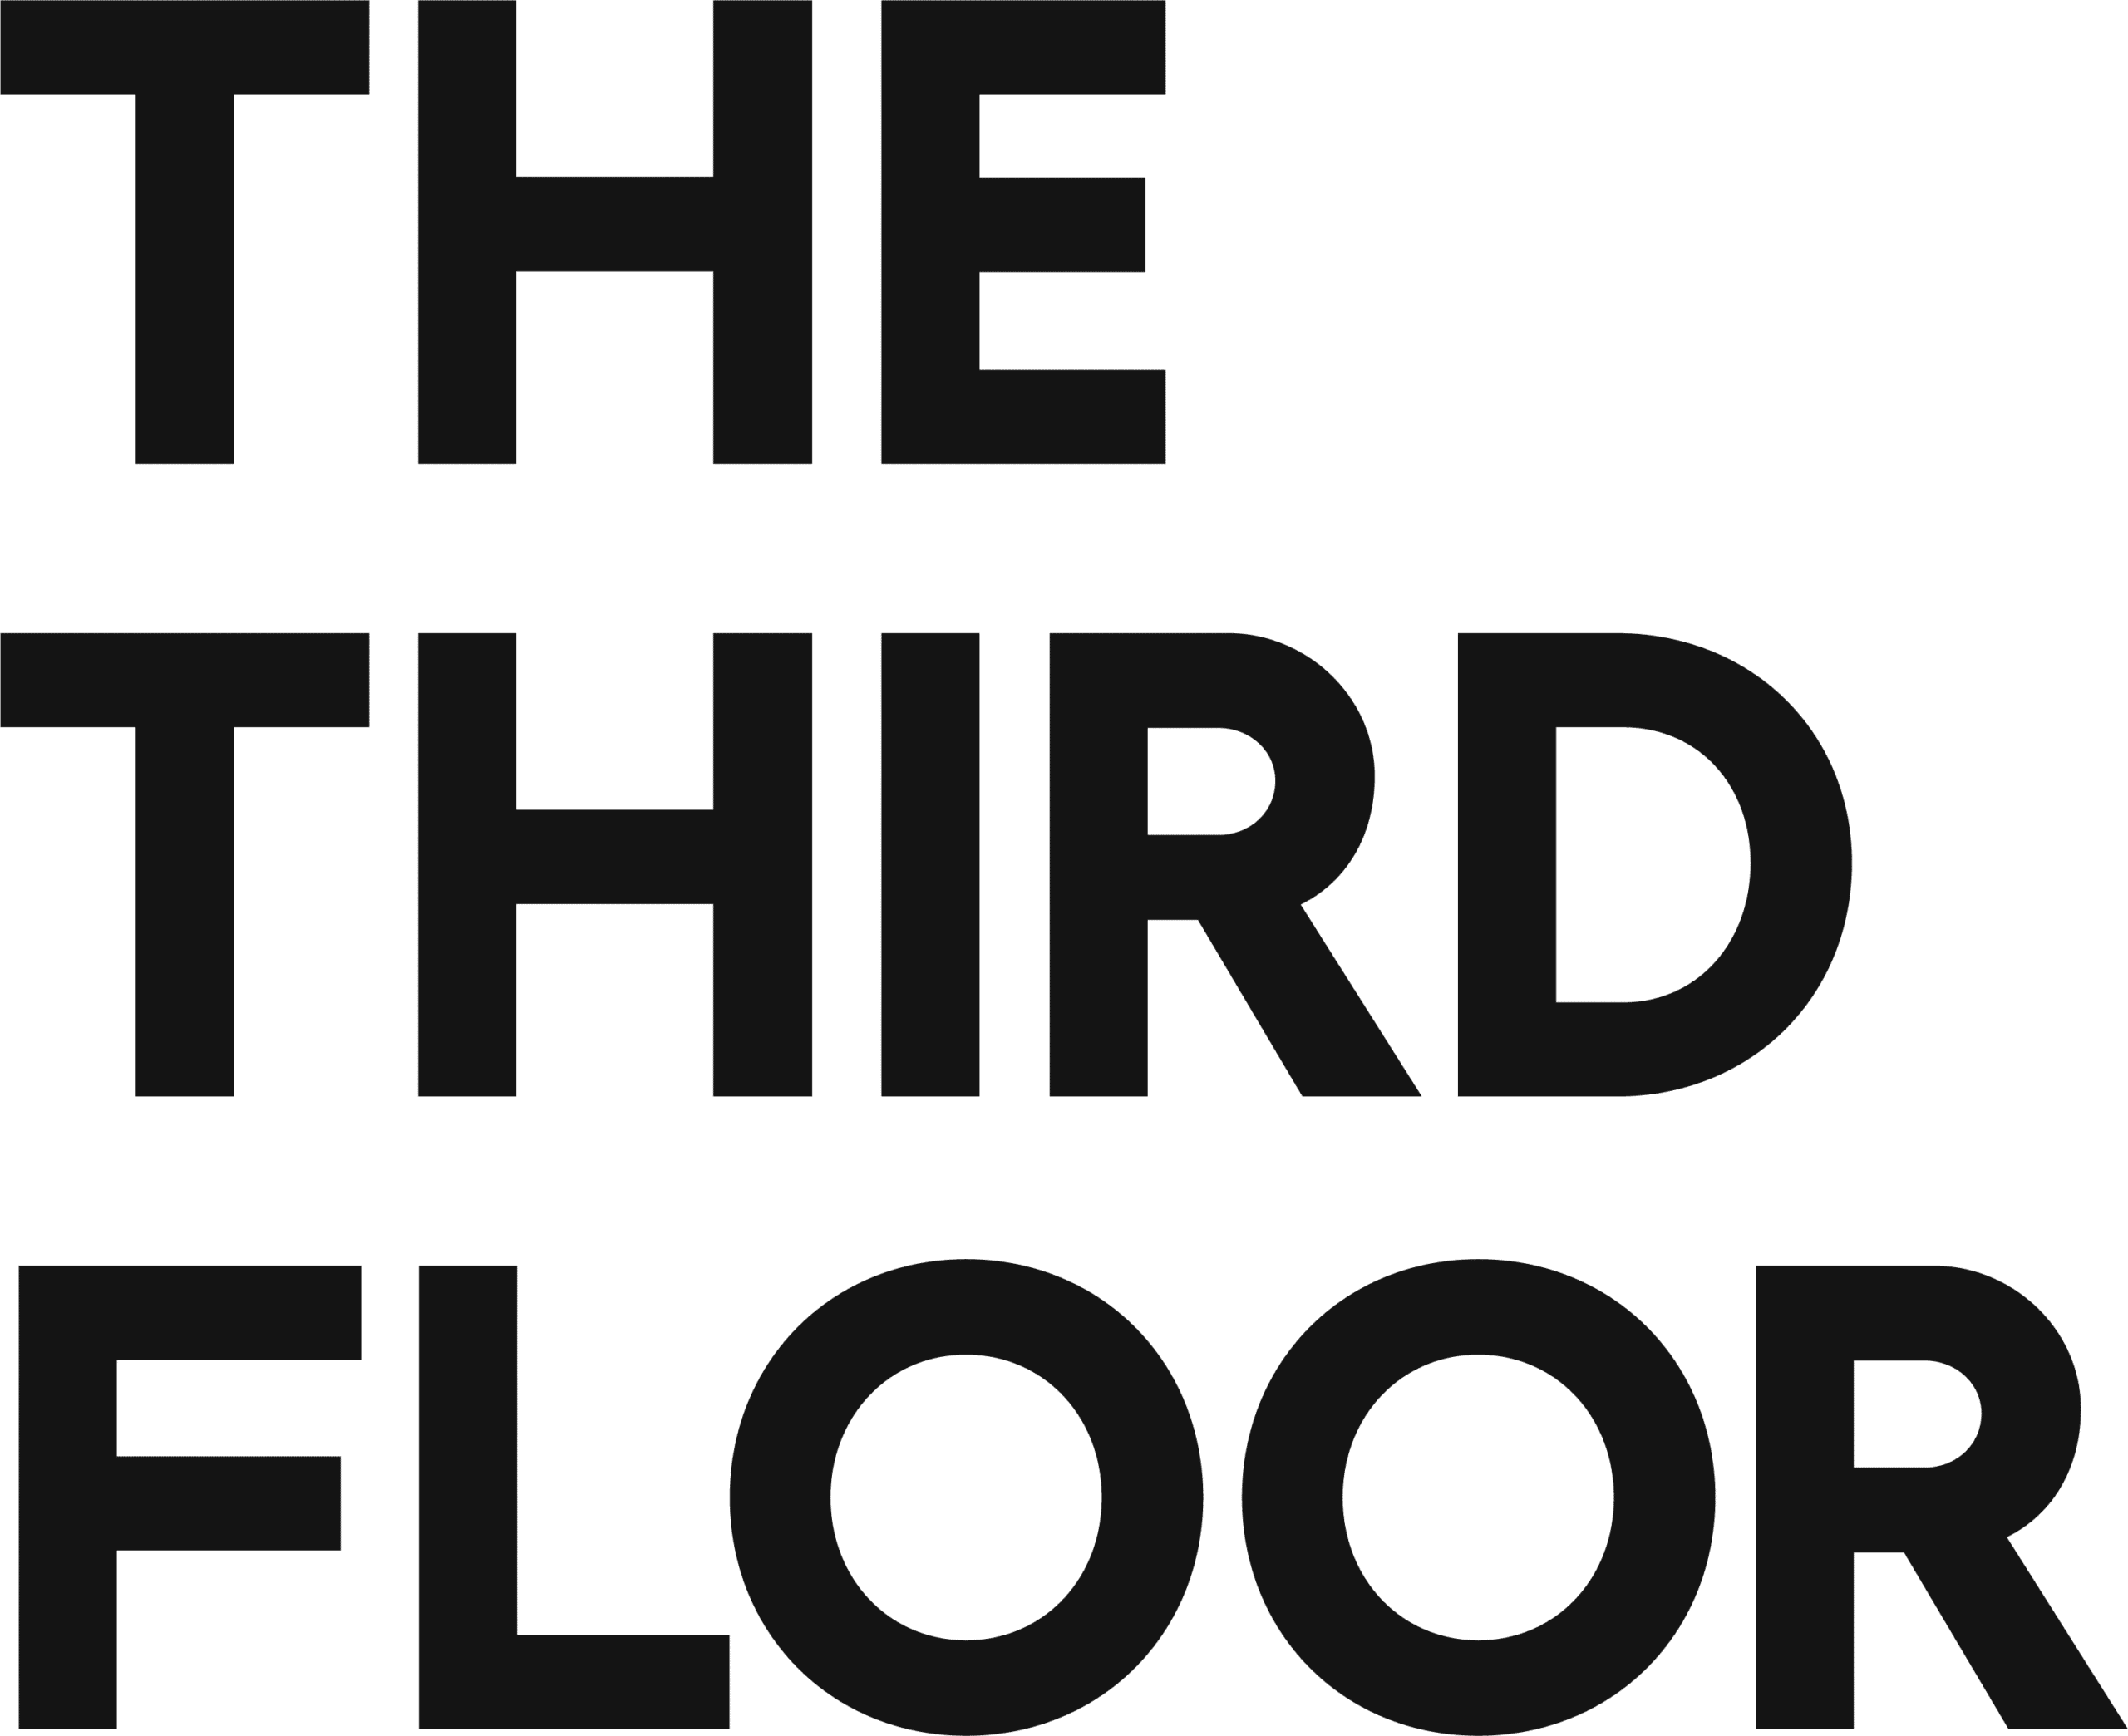 thethirdfloor